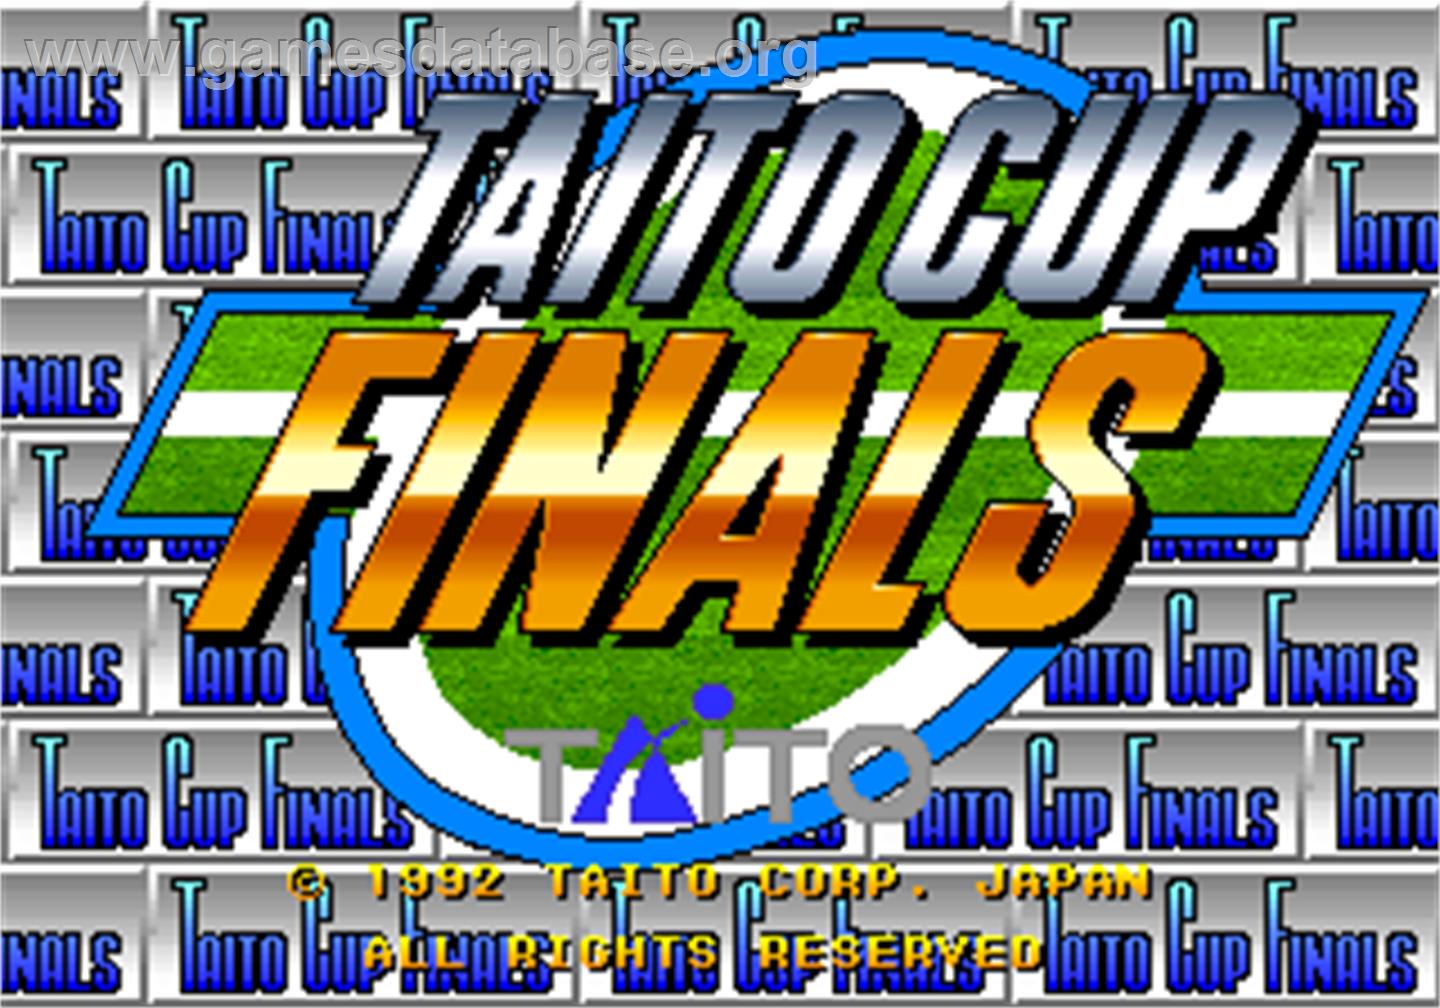 Taito Cup Finals - Arcade - Artwork - Title Screen